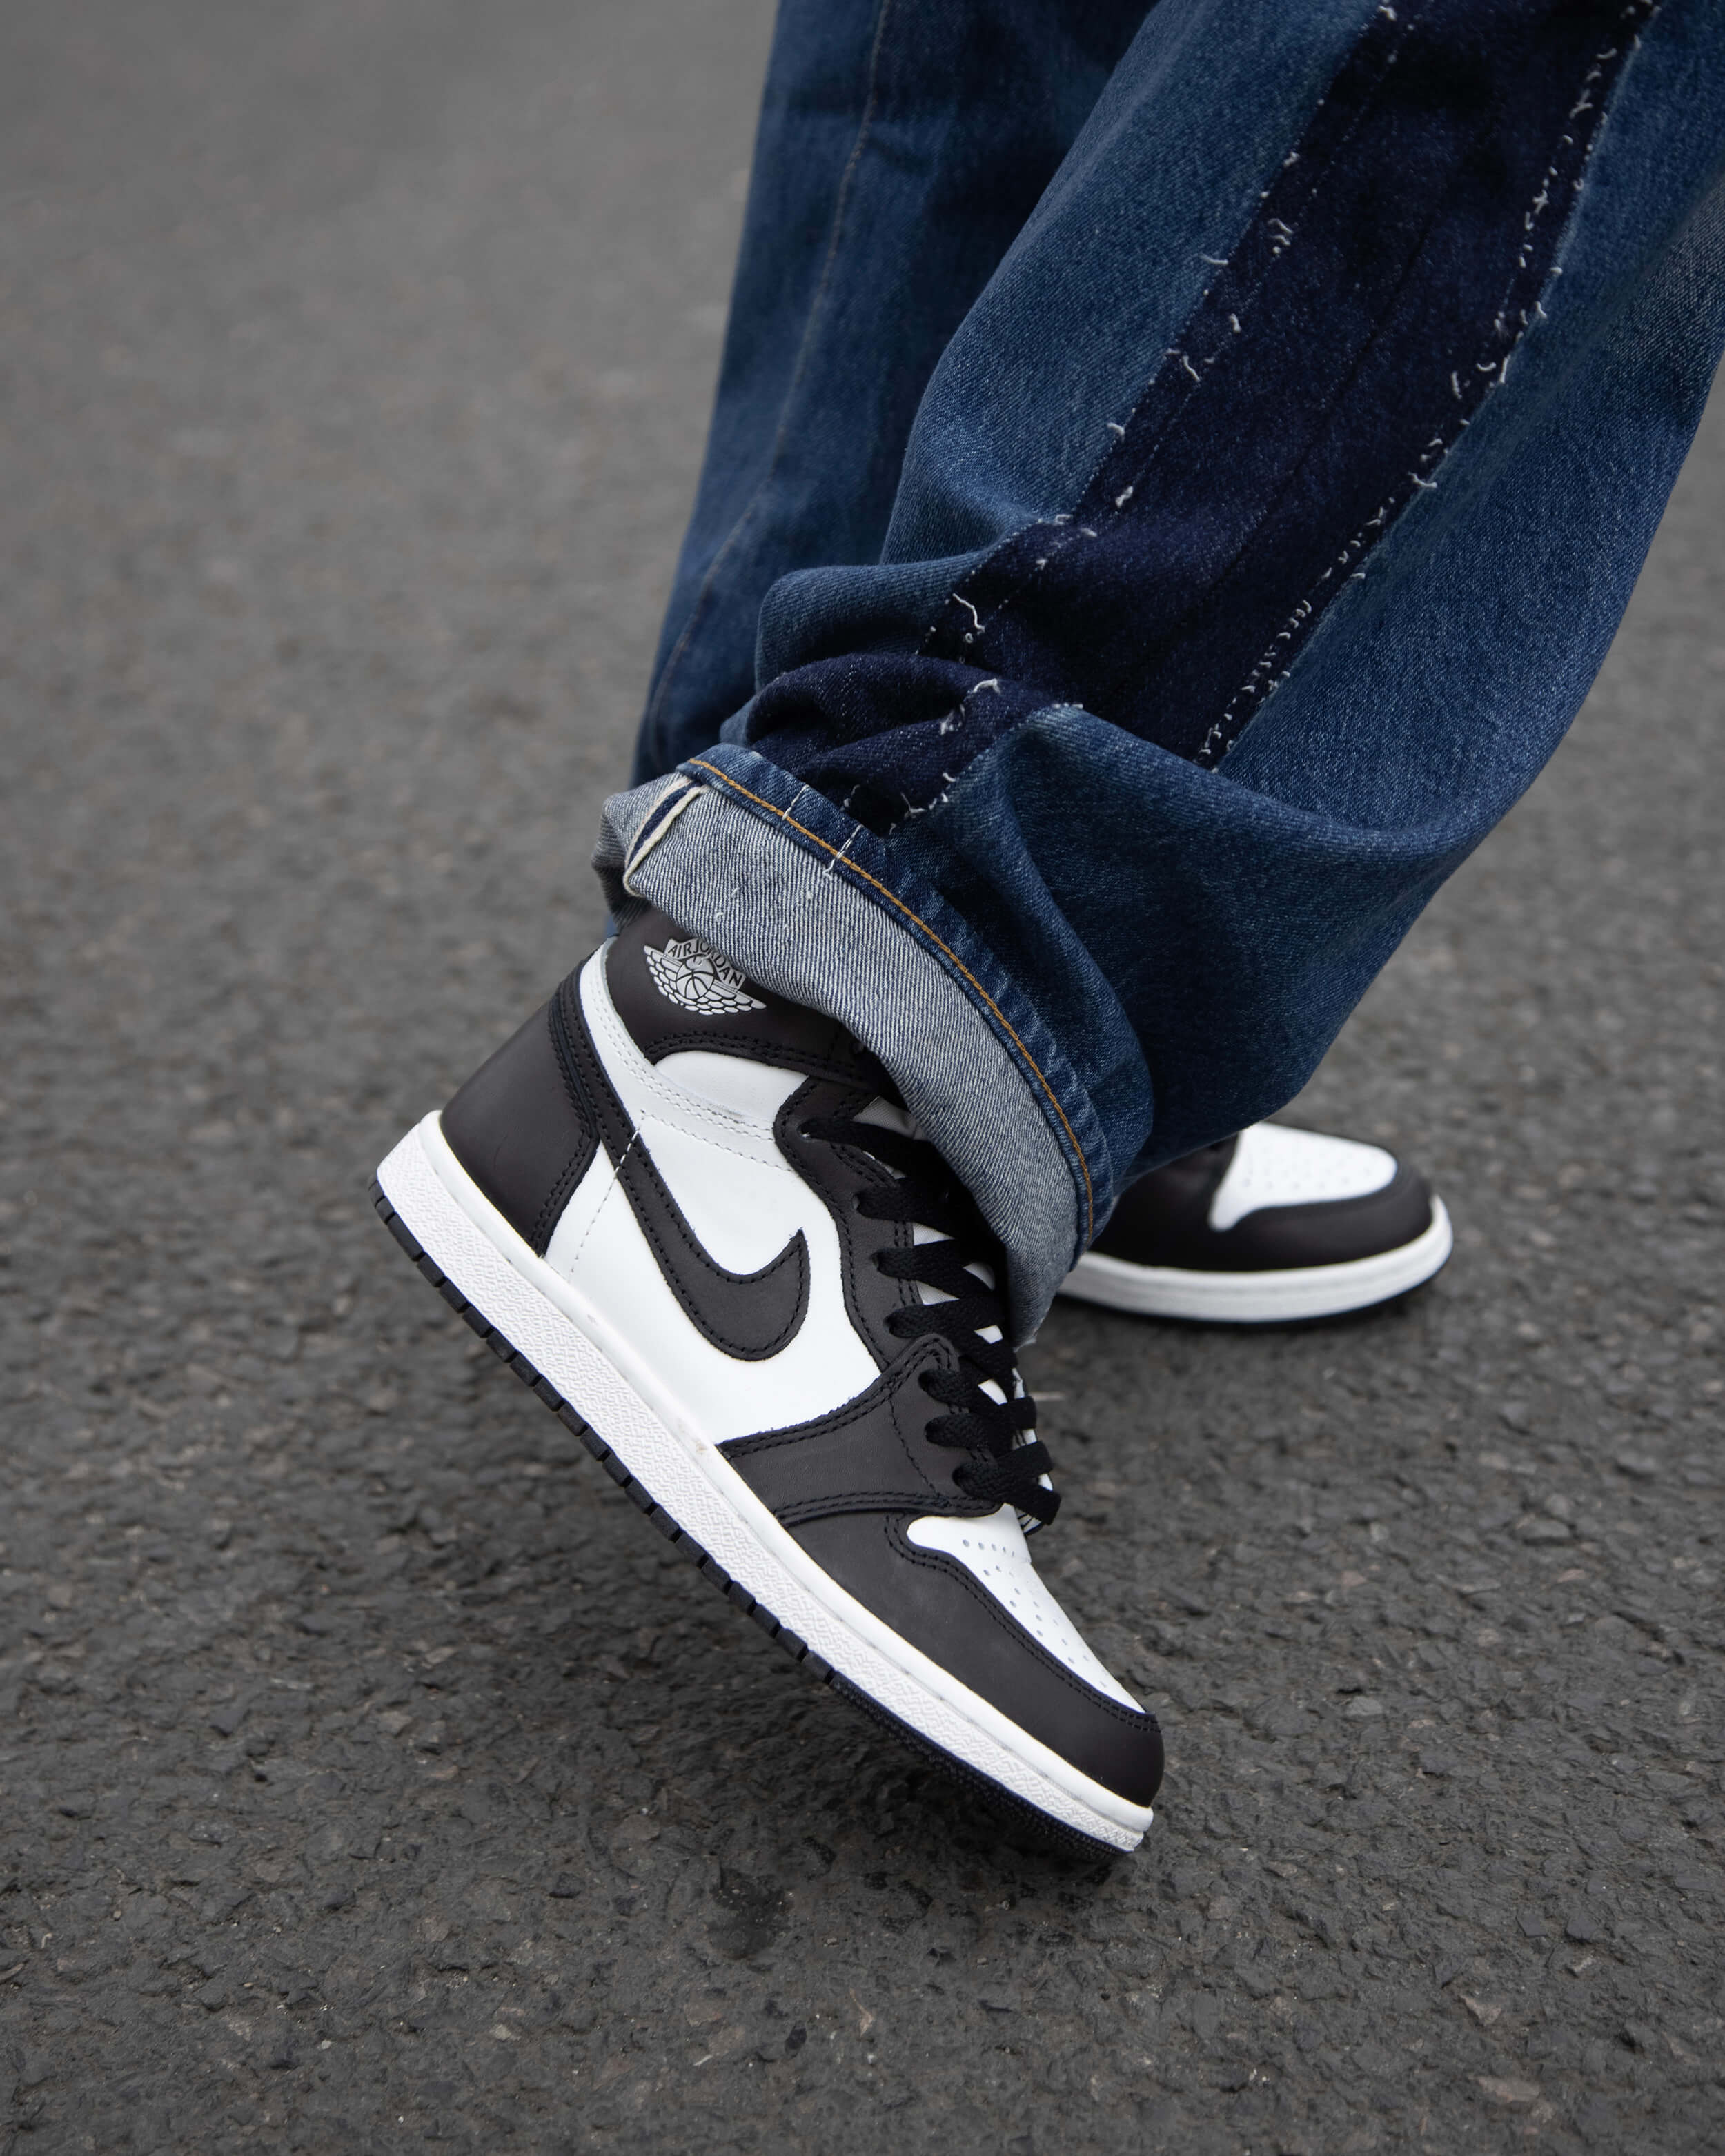 Nike Air Jordan 1 High ’85 “Black White